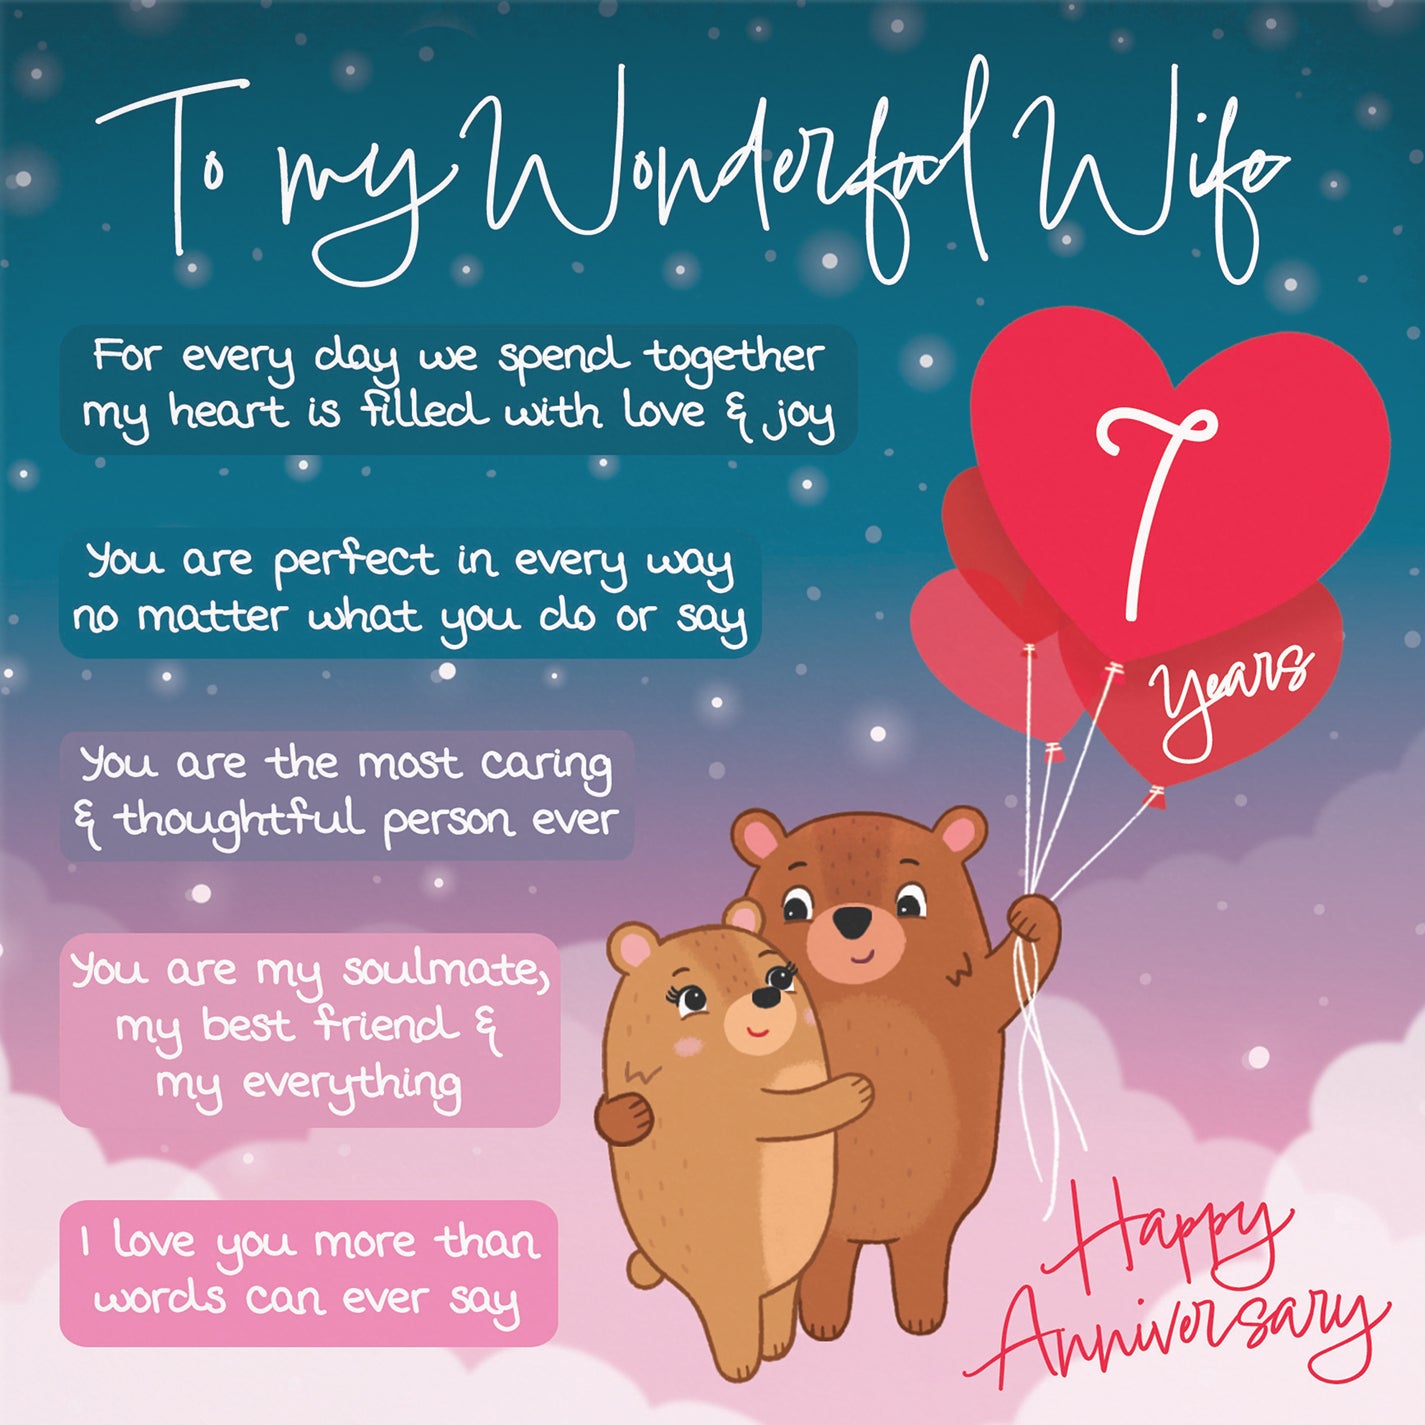 Wife 7th Anniversary Card Starry Night Cute Bears